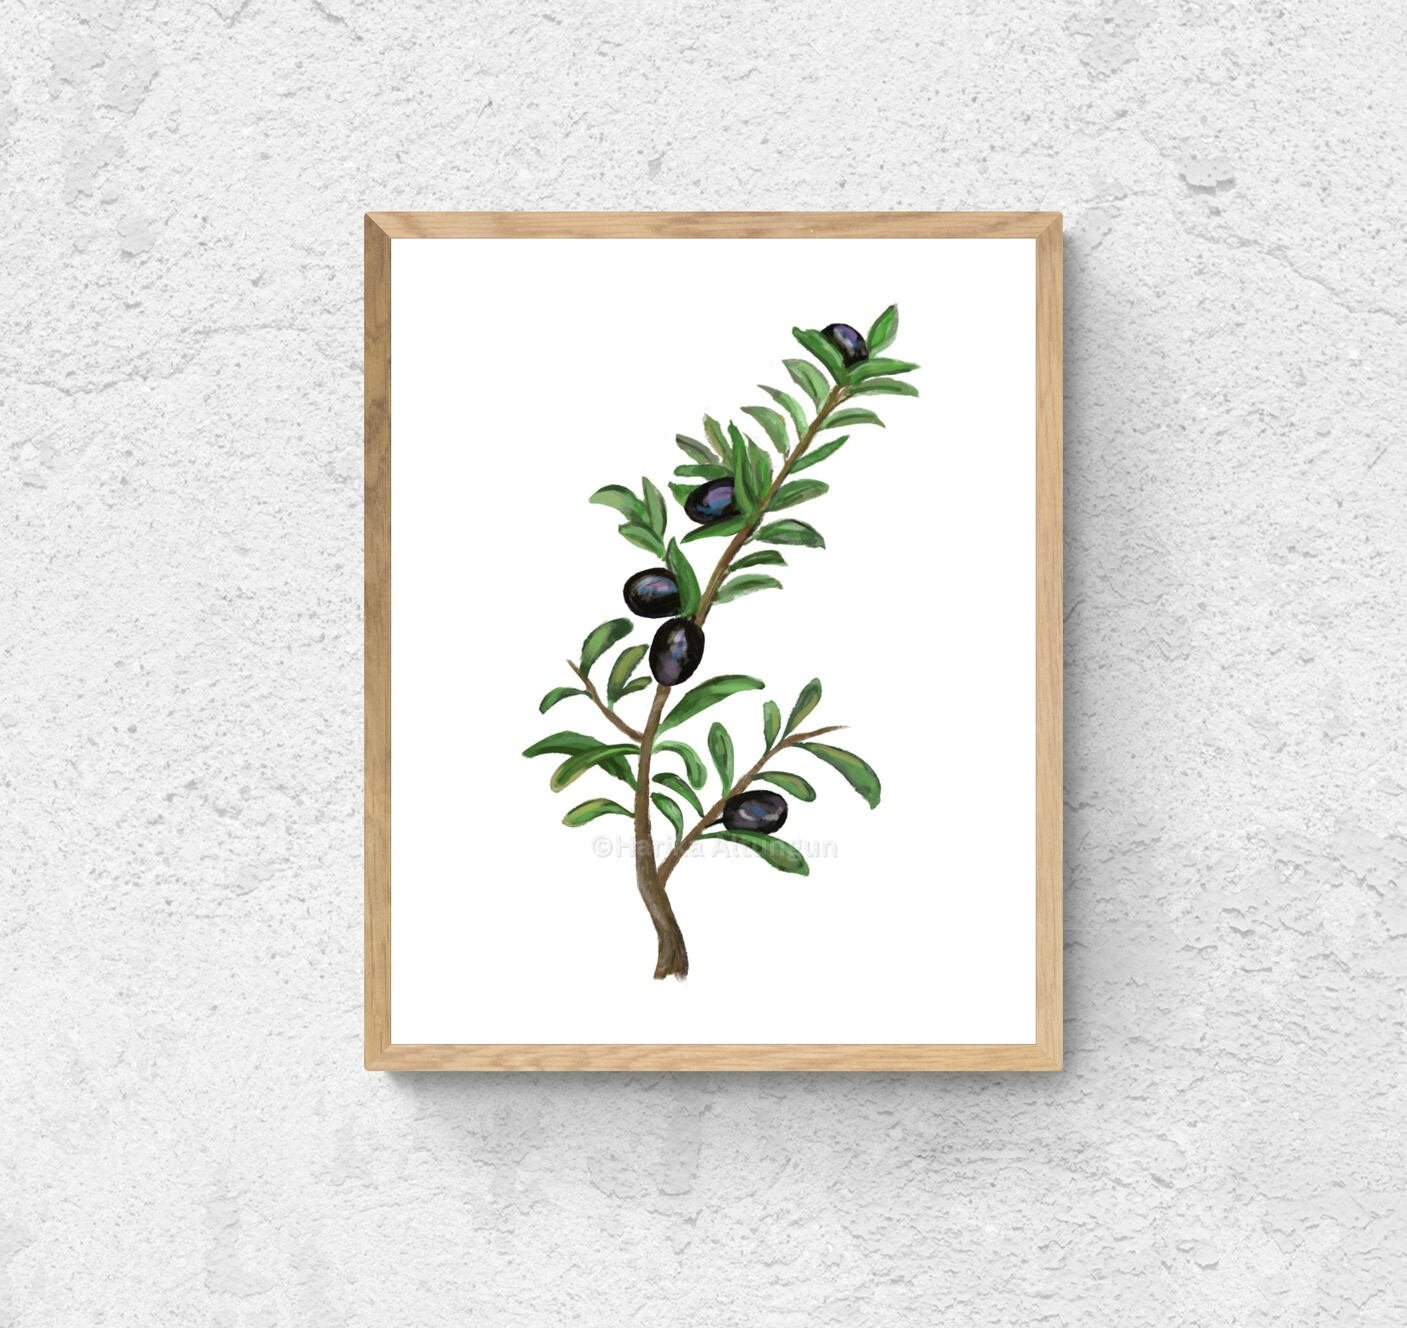 Set of 2 Olive Branch  and Tree Art Prints, Still Life Wall Art, Dining Room Decor, Botanical Painting, Plant Illustration, Farmhouse Decor